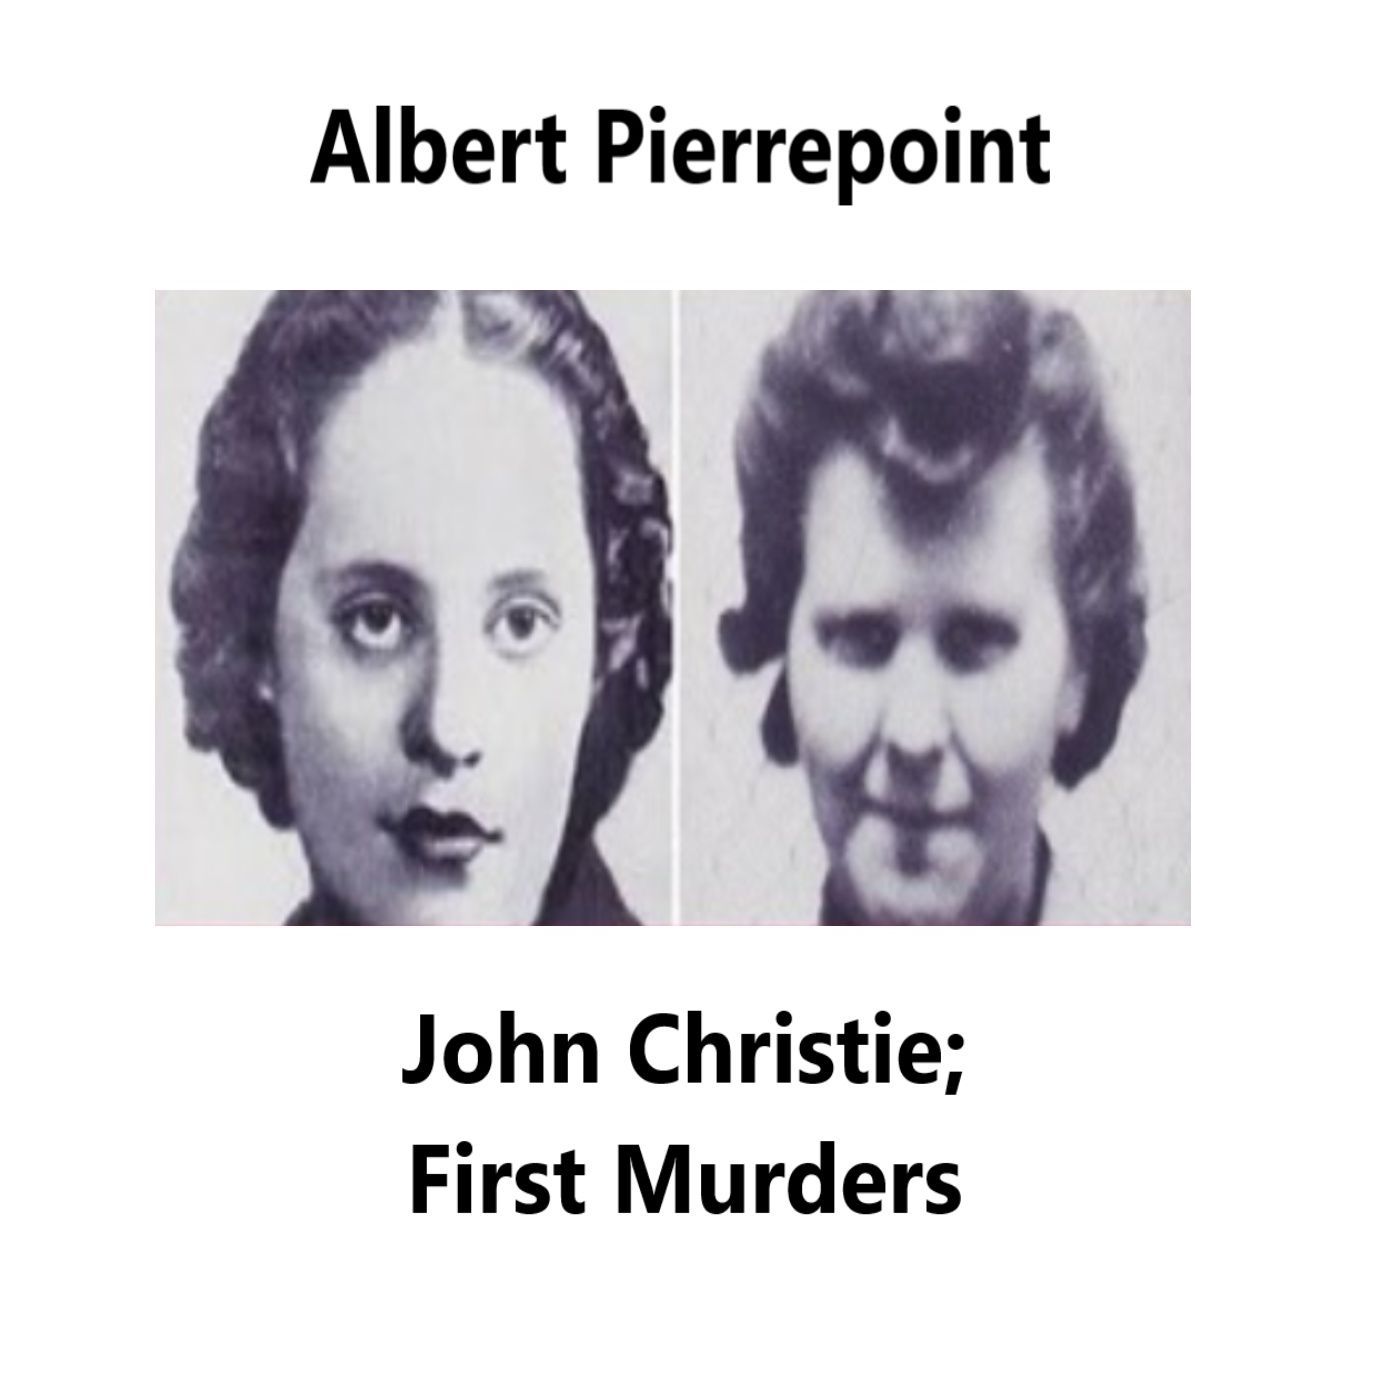 Albert Pierrepoint: John Christie's first murders.